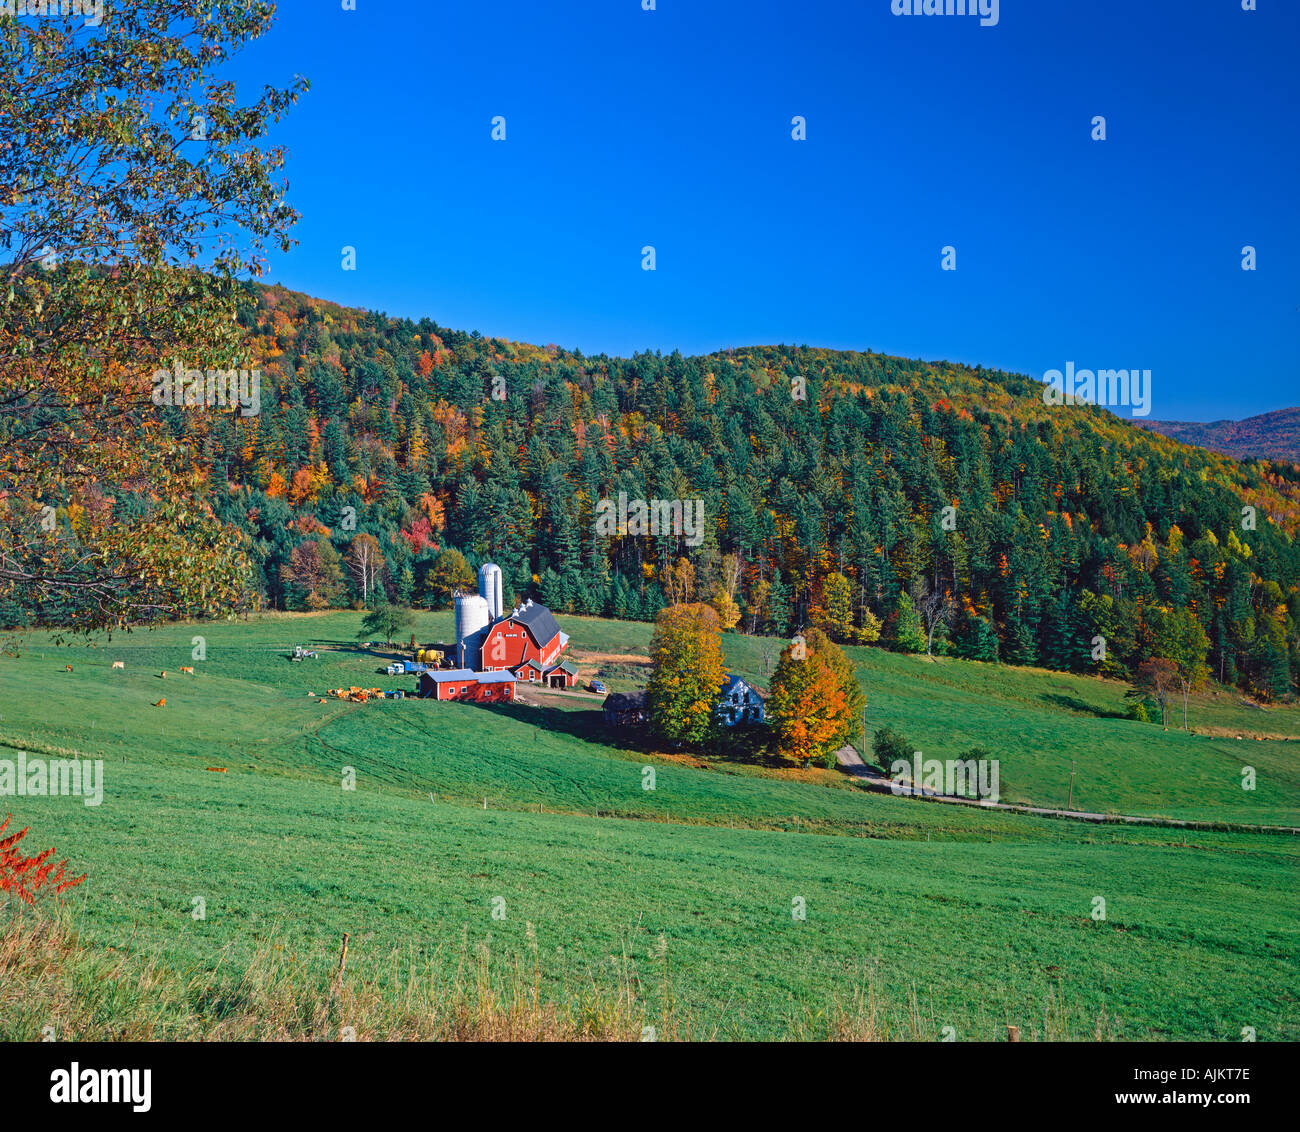 farm countryside near the village of Barnard Vermont USA Stock Photo